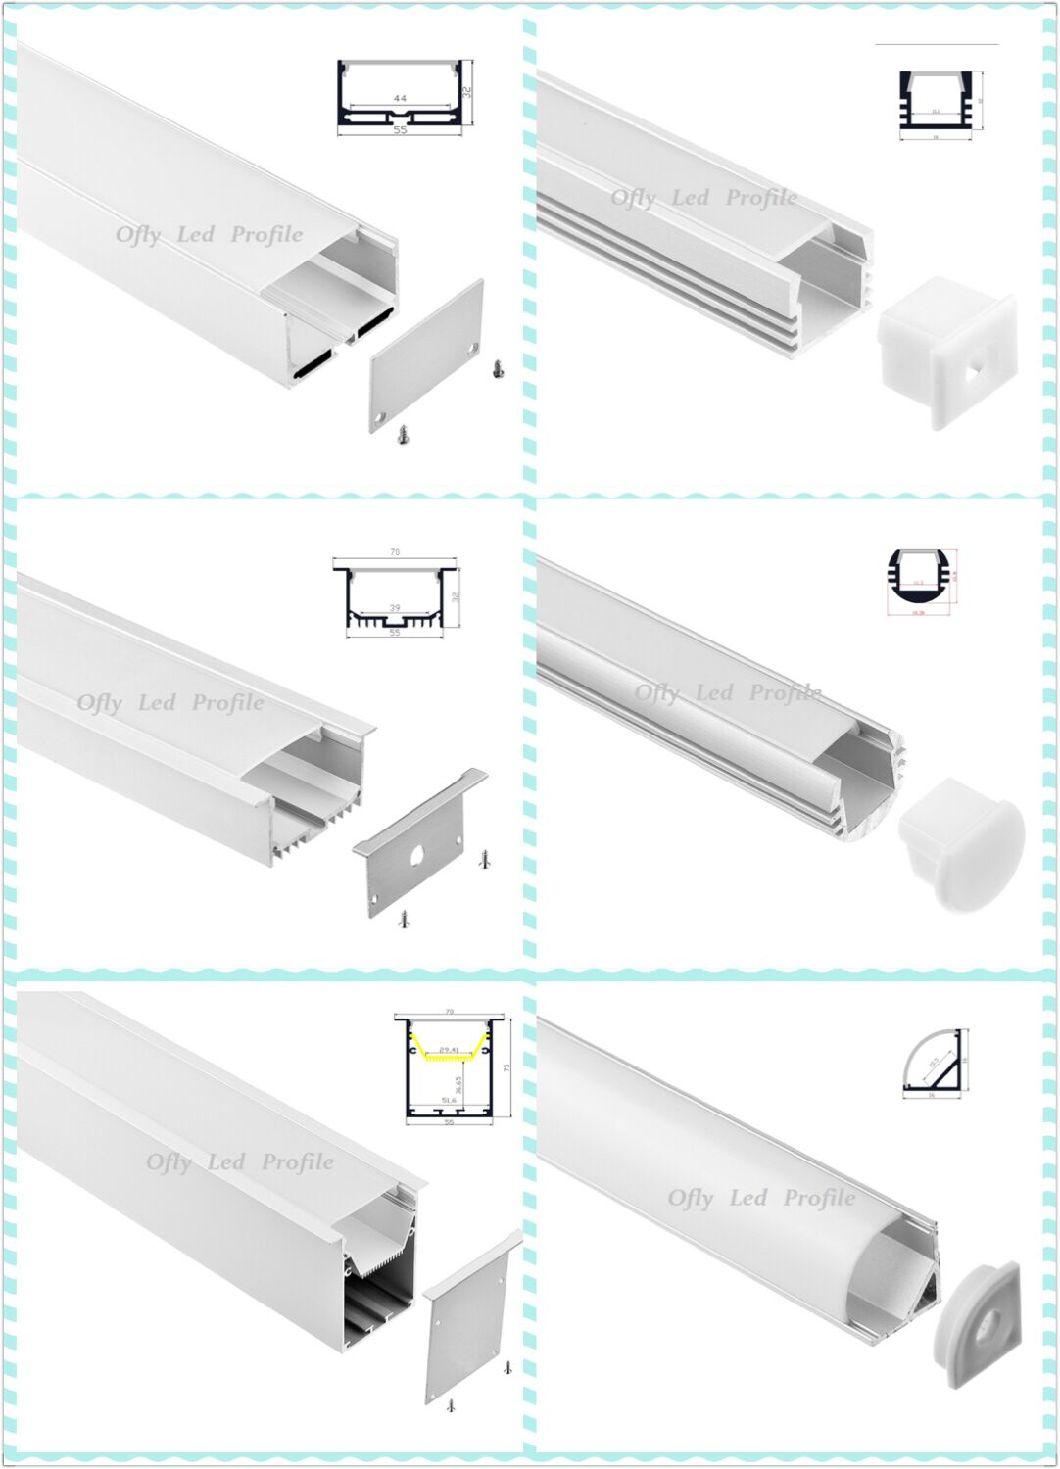 LED Profile, LED Furniture Lighting Application